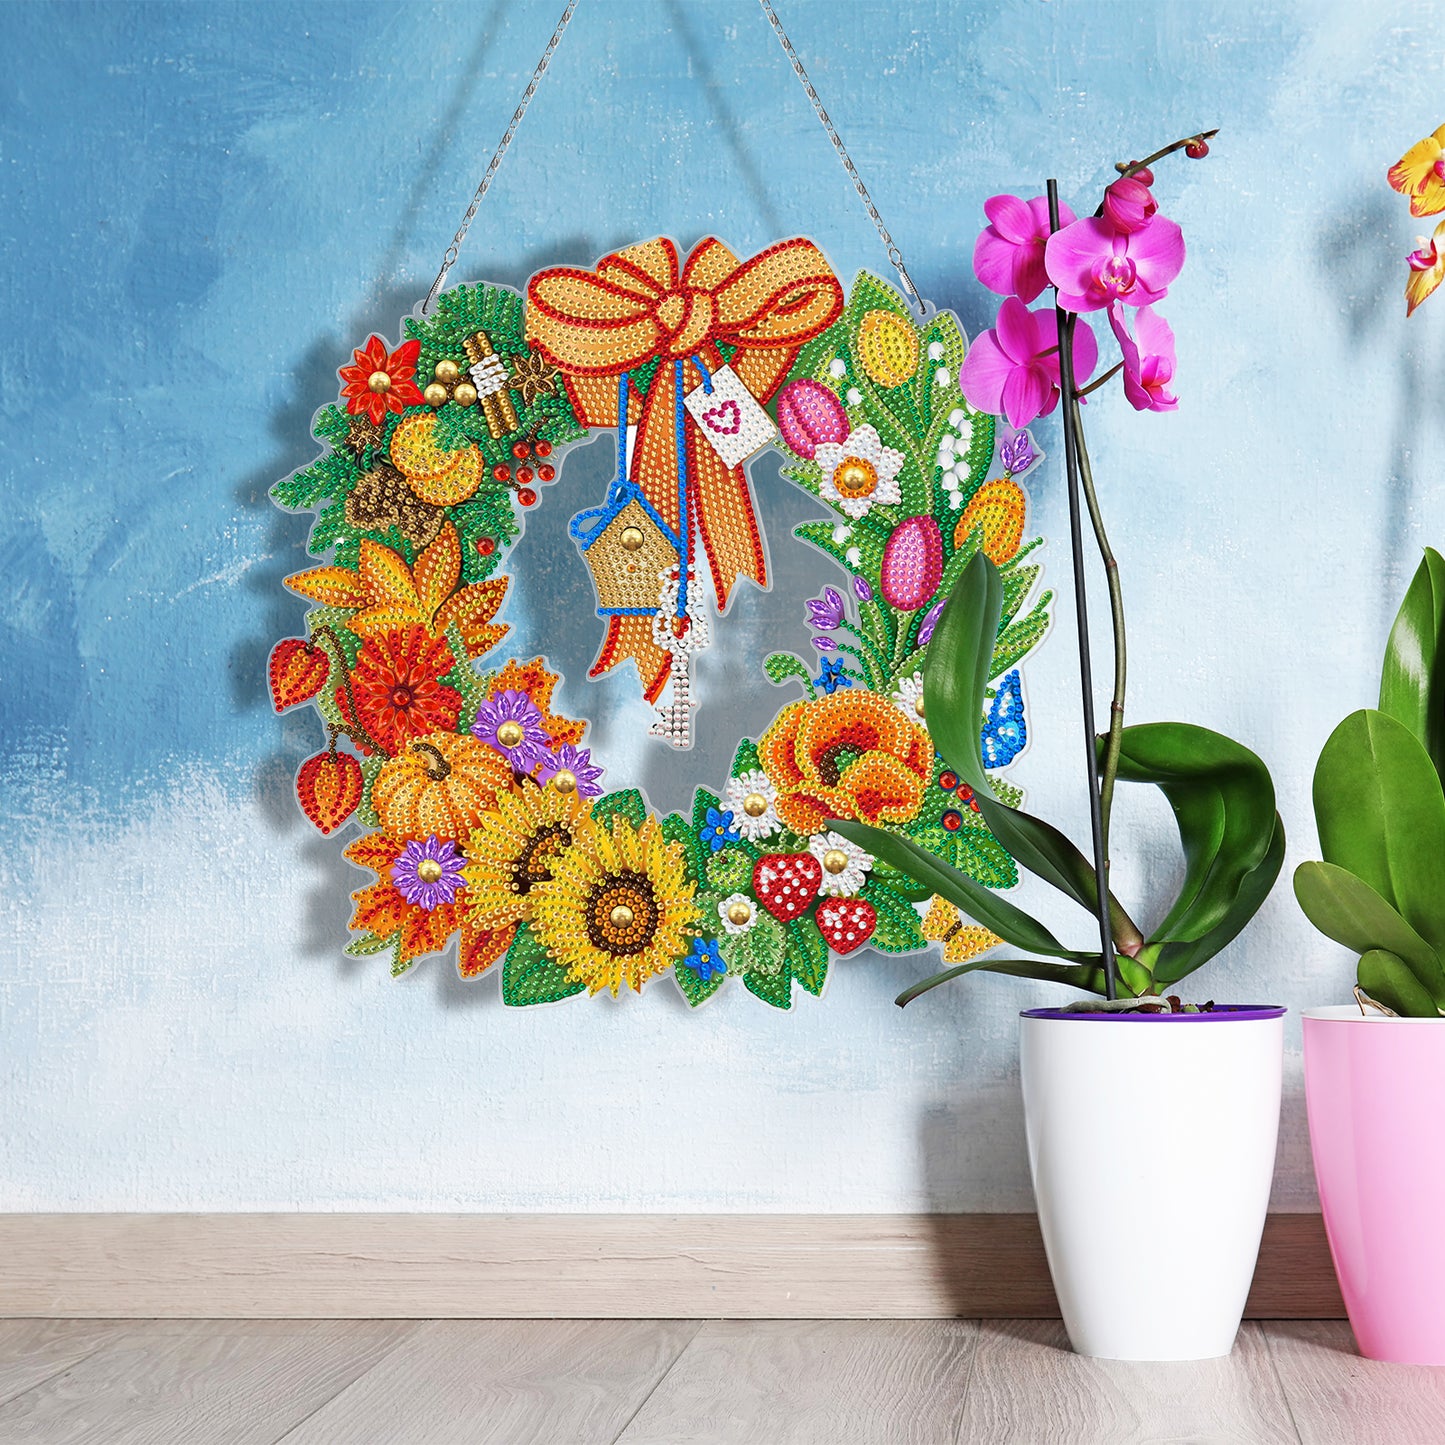 DIY Diamond Pendant Door Wall Decoration | Flower Garland